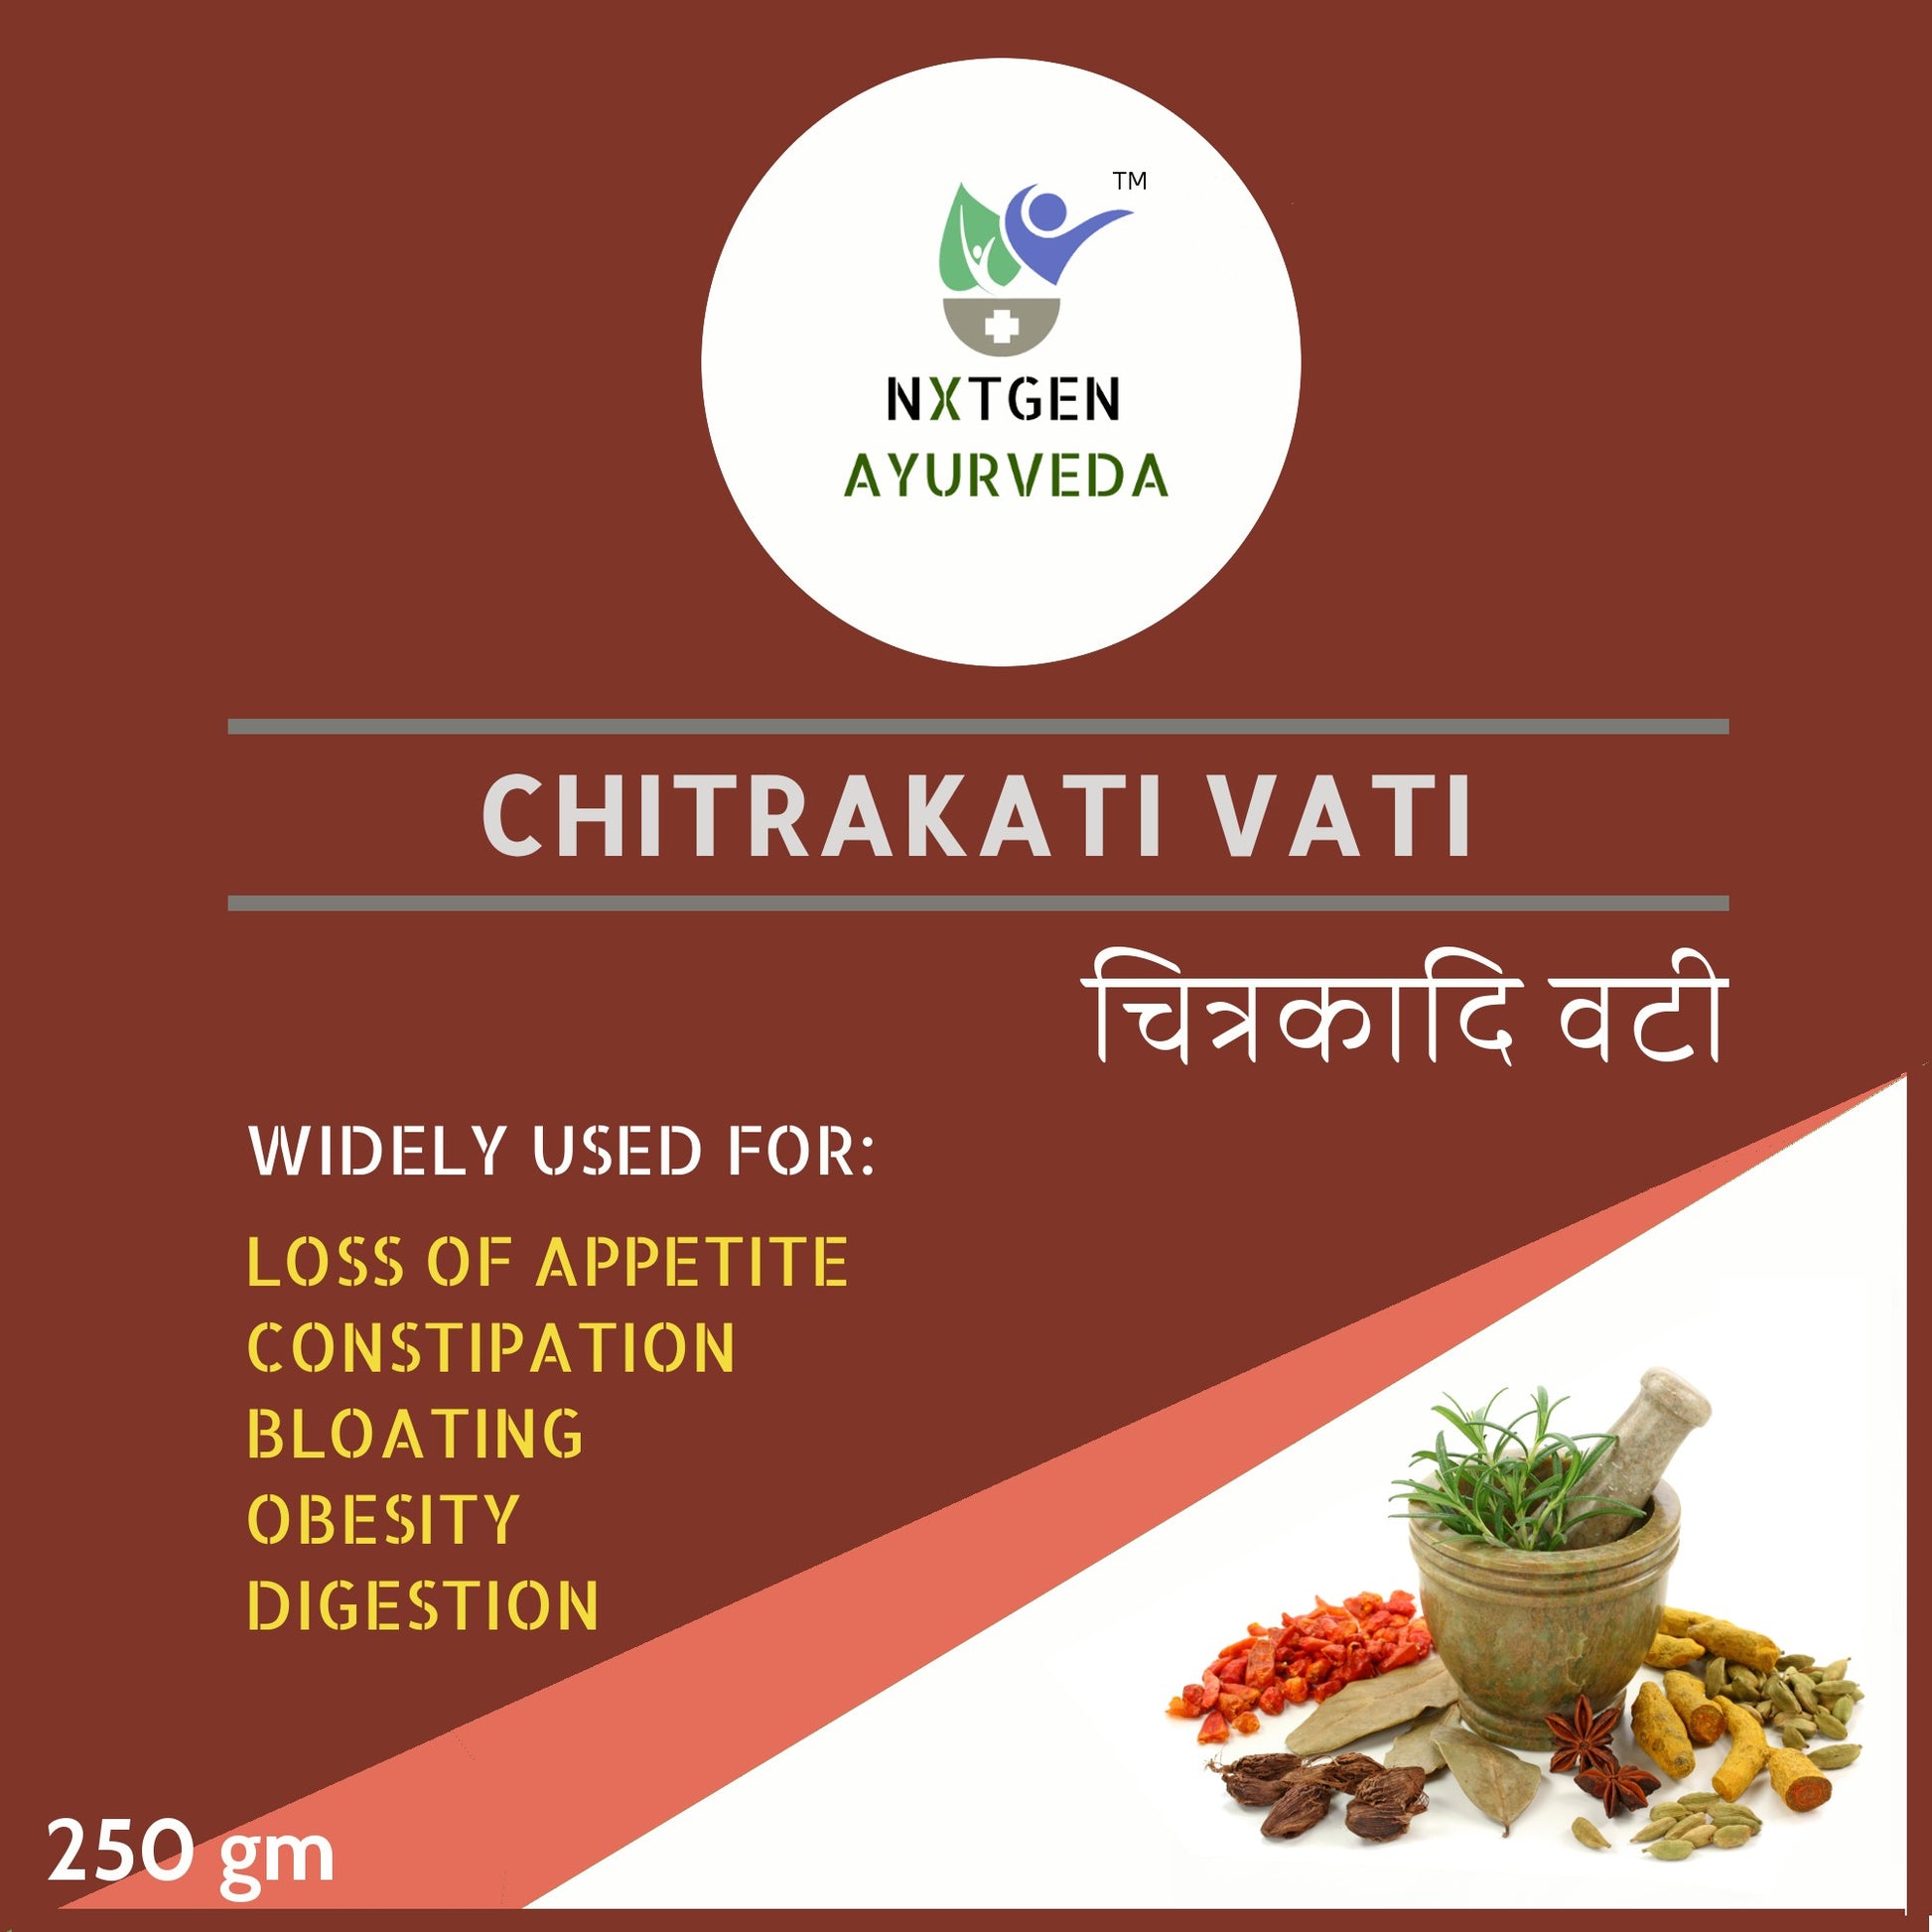 Chitrakadi Vati is a traditional Ayurvedic herbal medicine used for digestive support.